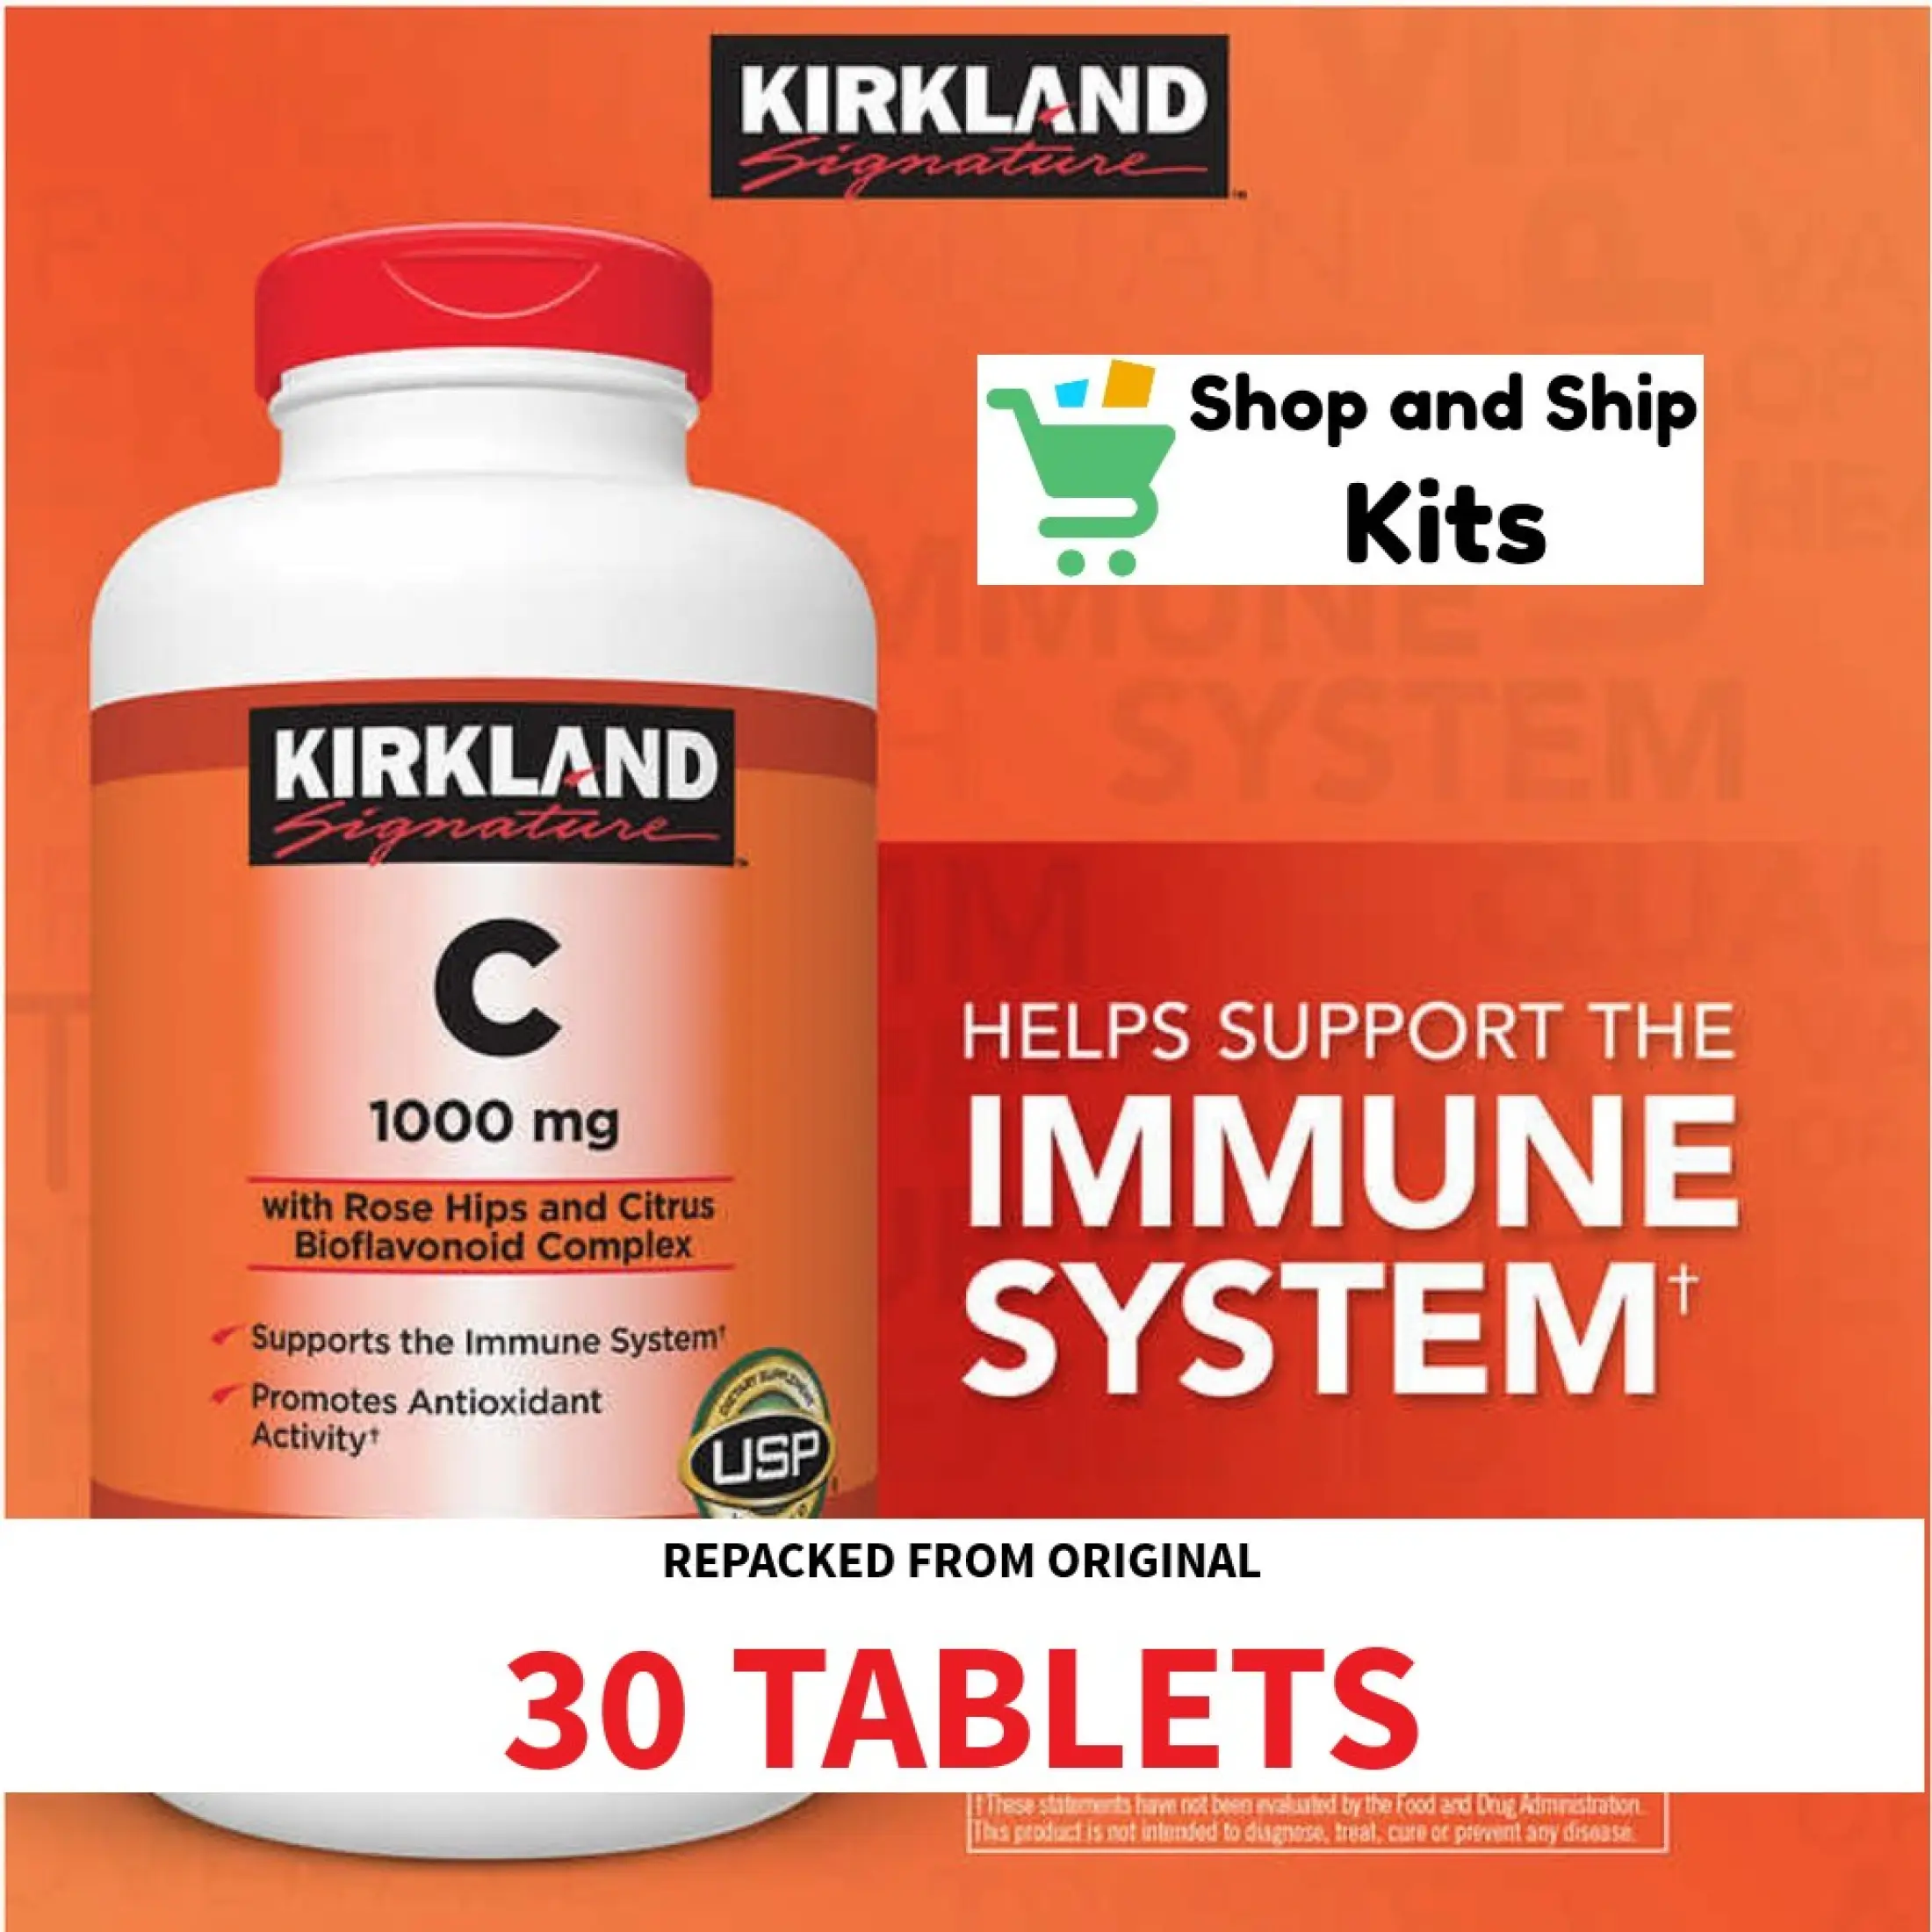 Kirkland Vitamin C Good For Pregnant